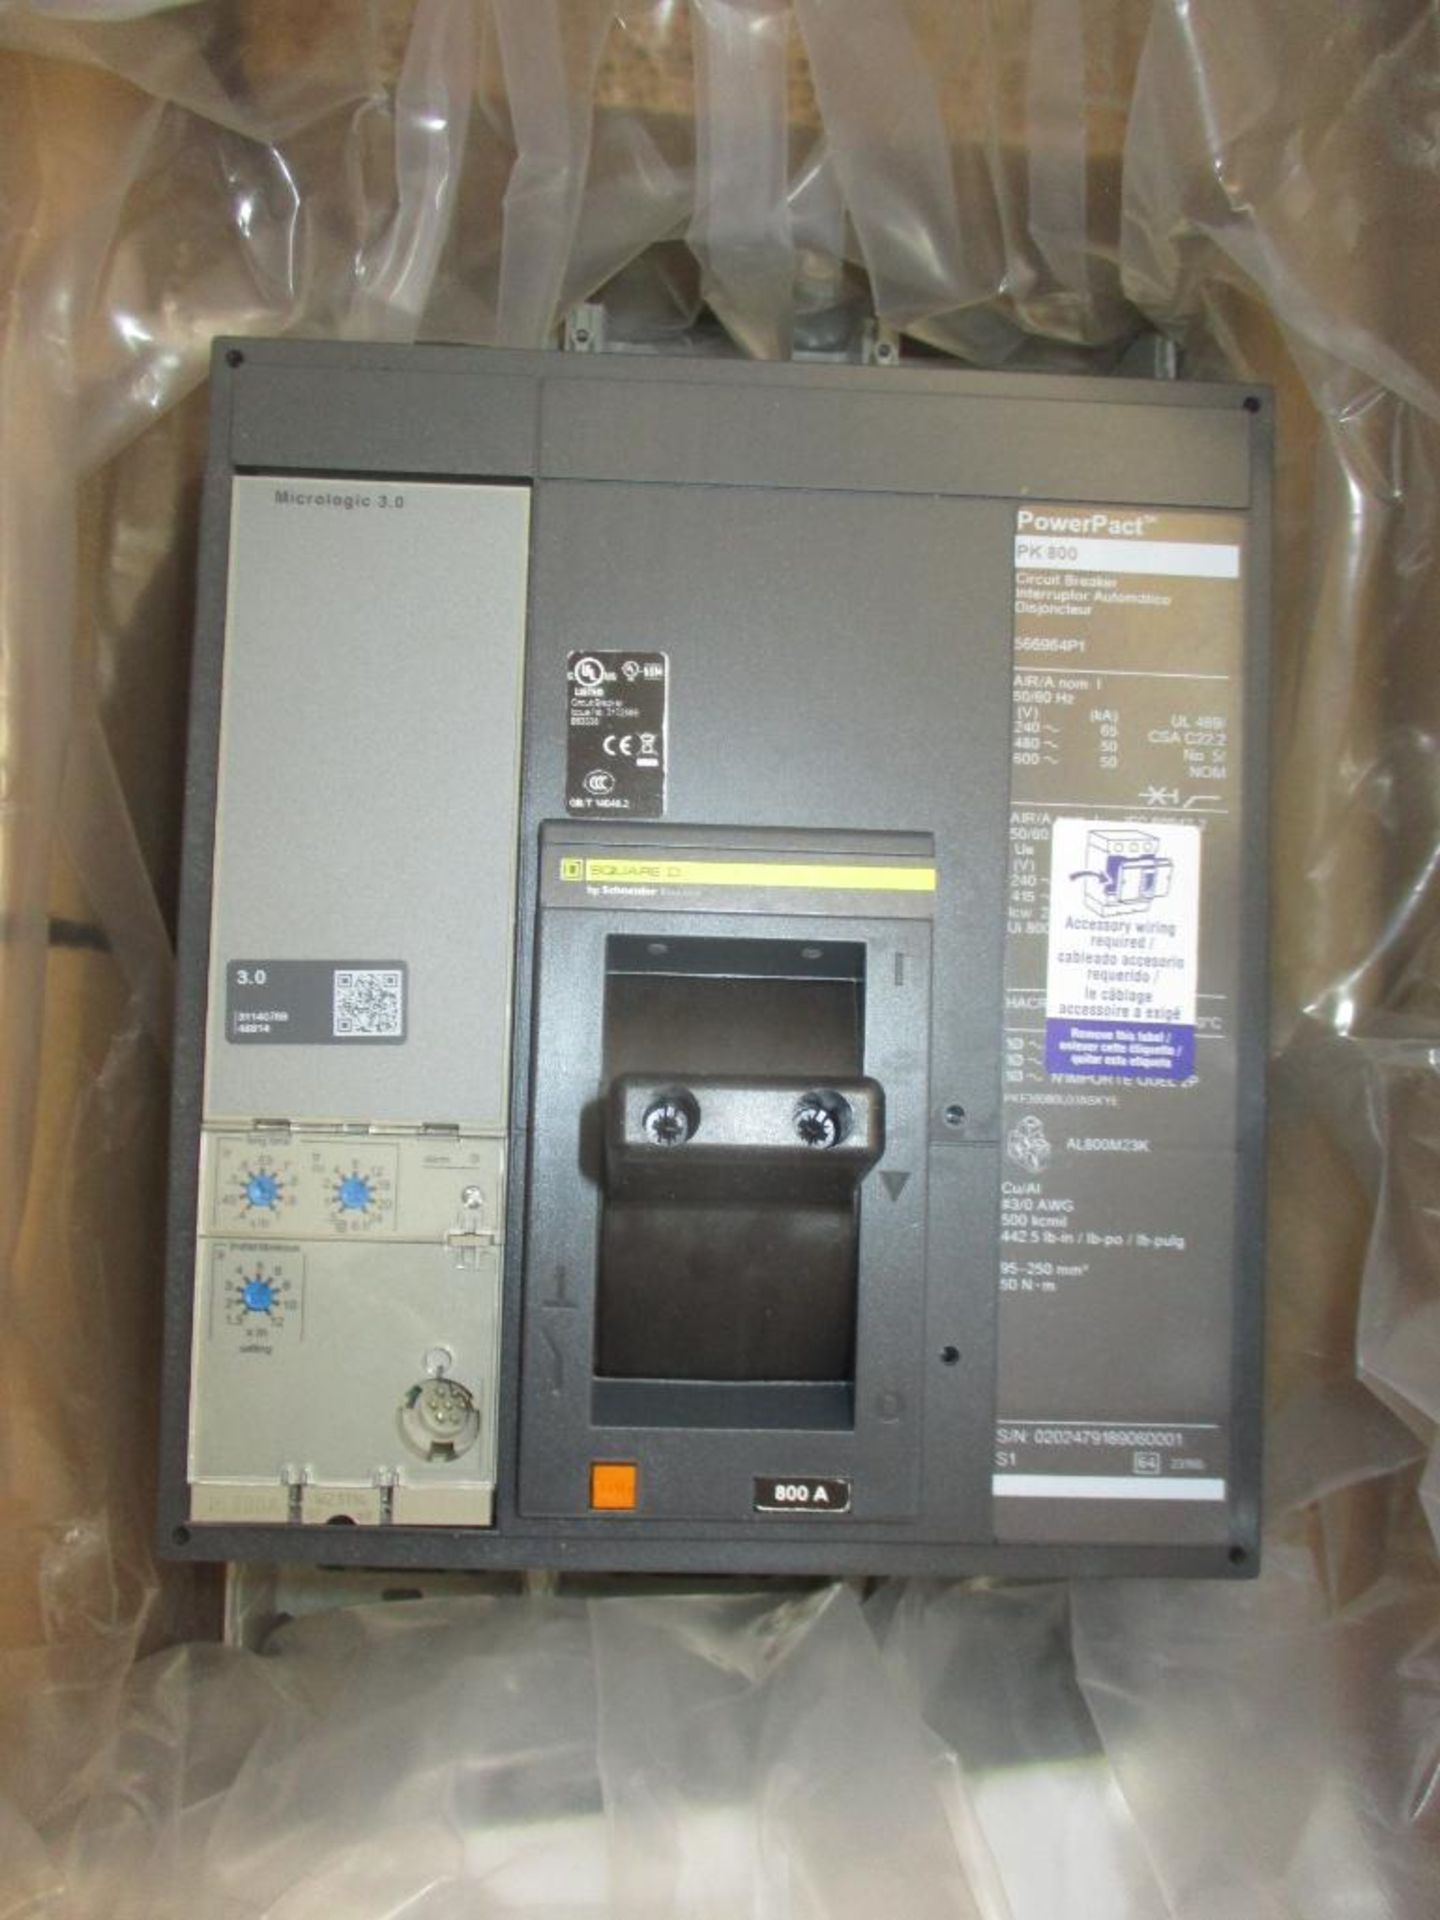 Square D 800 AMP Circuit Breaker, 566964P2, 800A, 3P, 600VAC, PowerPacT PK 800, Micrologic 3.0 (New